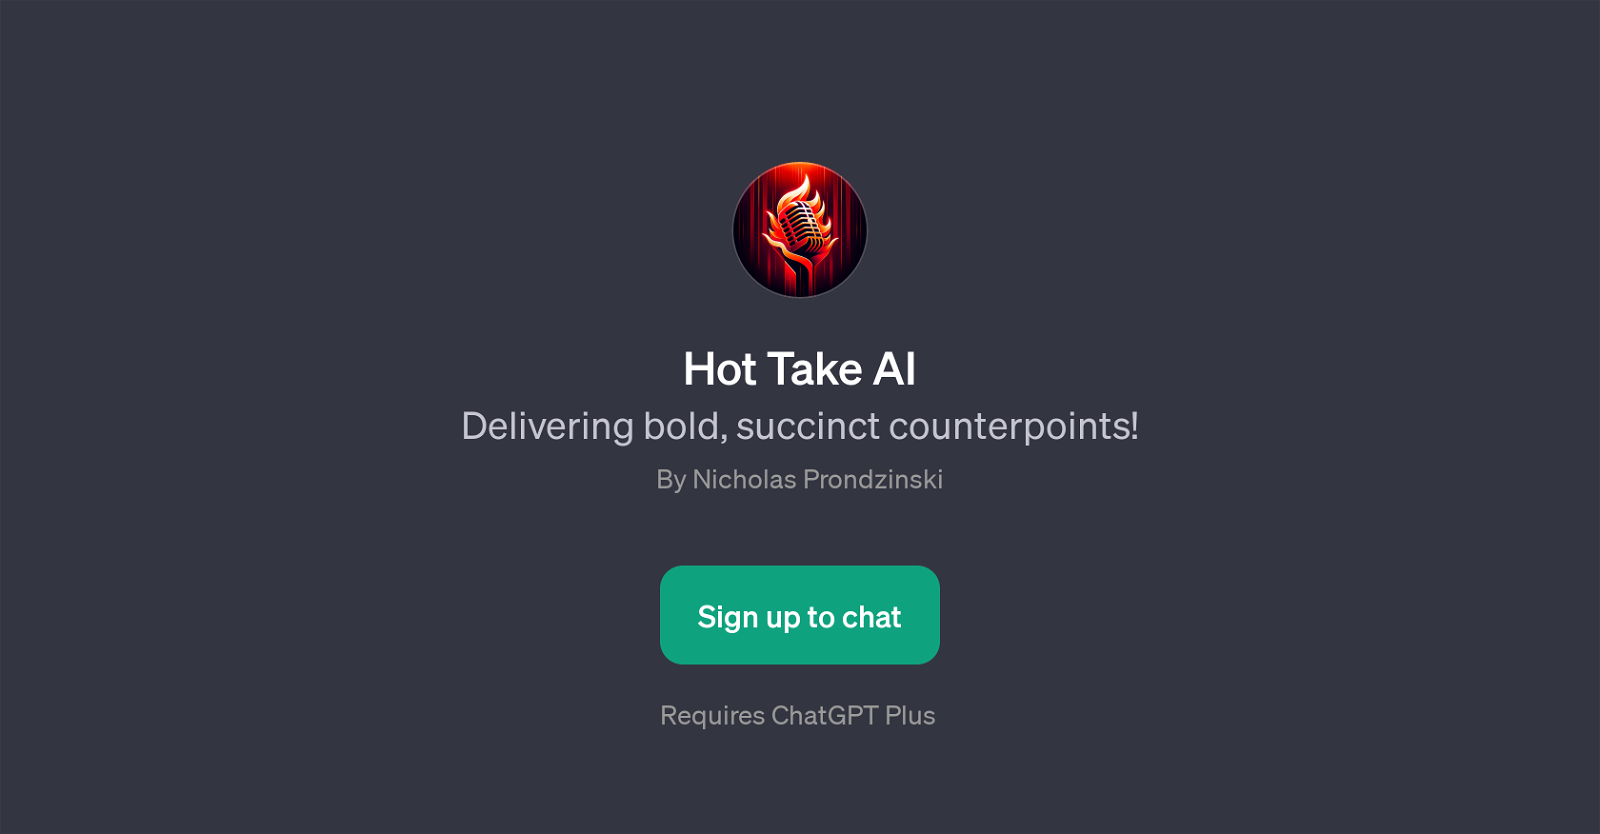 Hot Take AI website